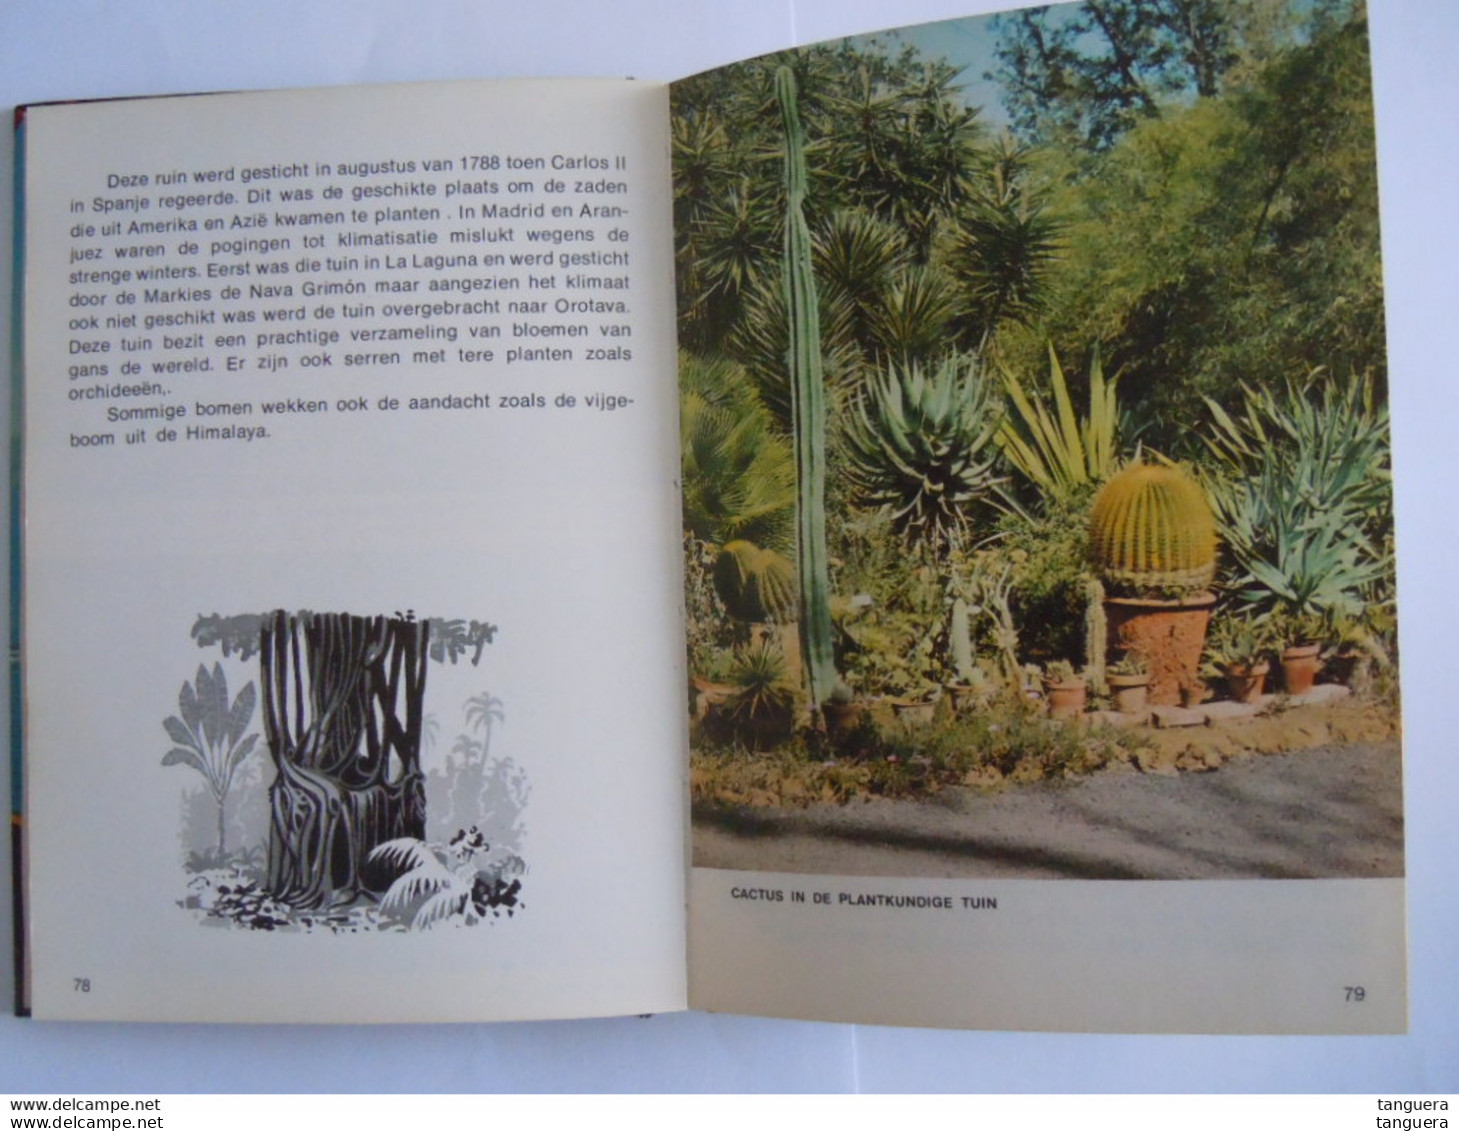 Tenerife Gids en souvenir 1971 tekst C.N. Perez vertaald uit het spaans